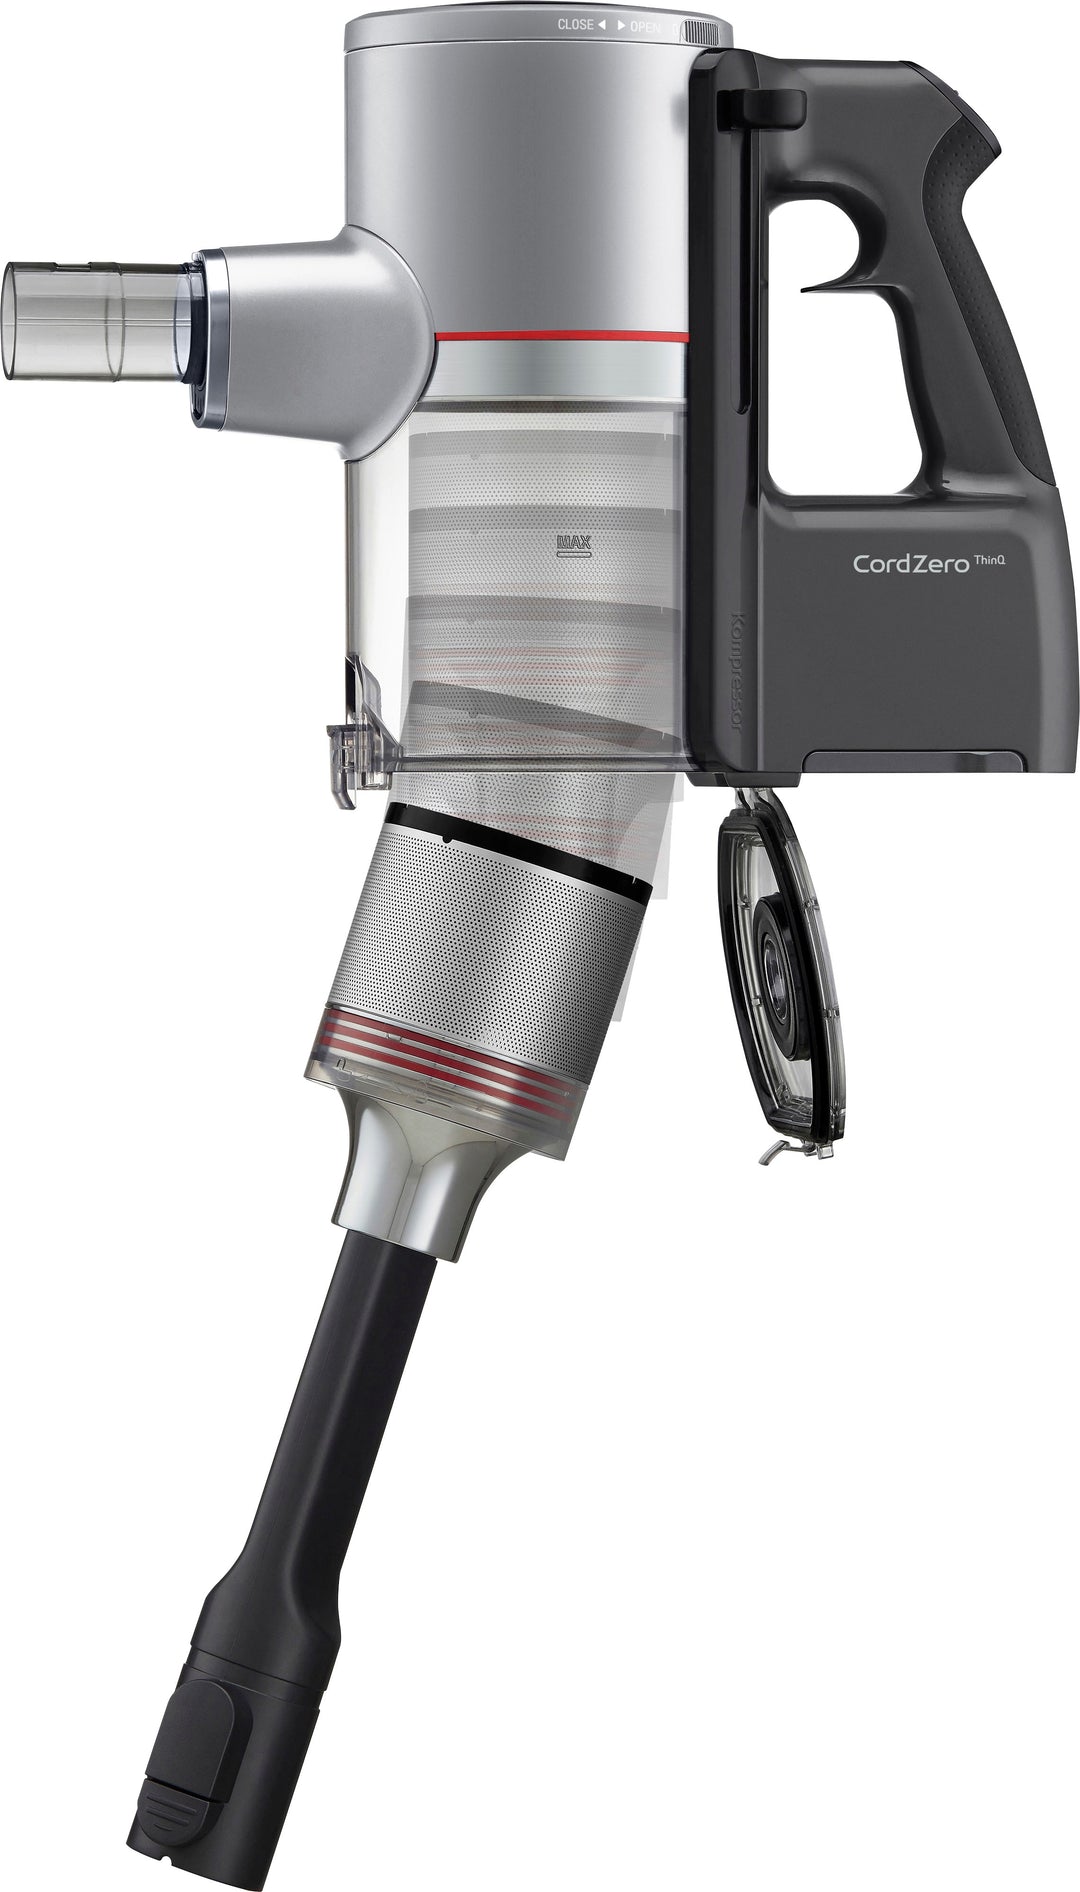 LG - CordZero Cordless Stick Vacuum with Kompressor technology - Matte Silver_21